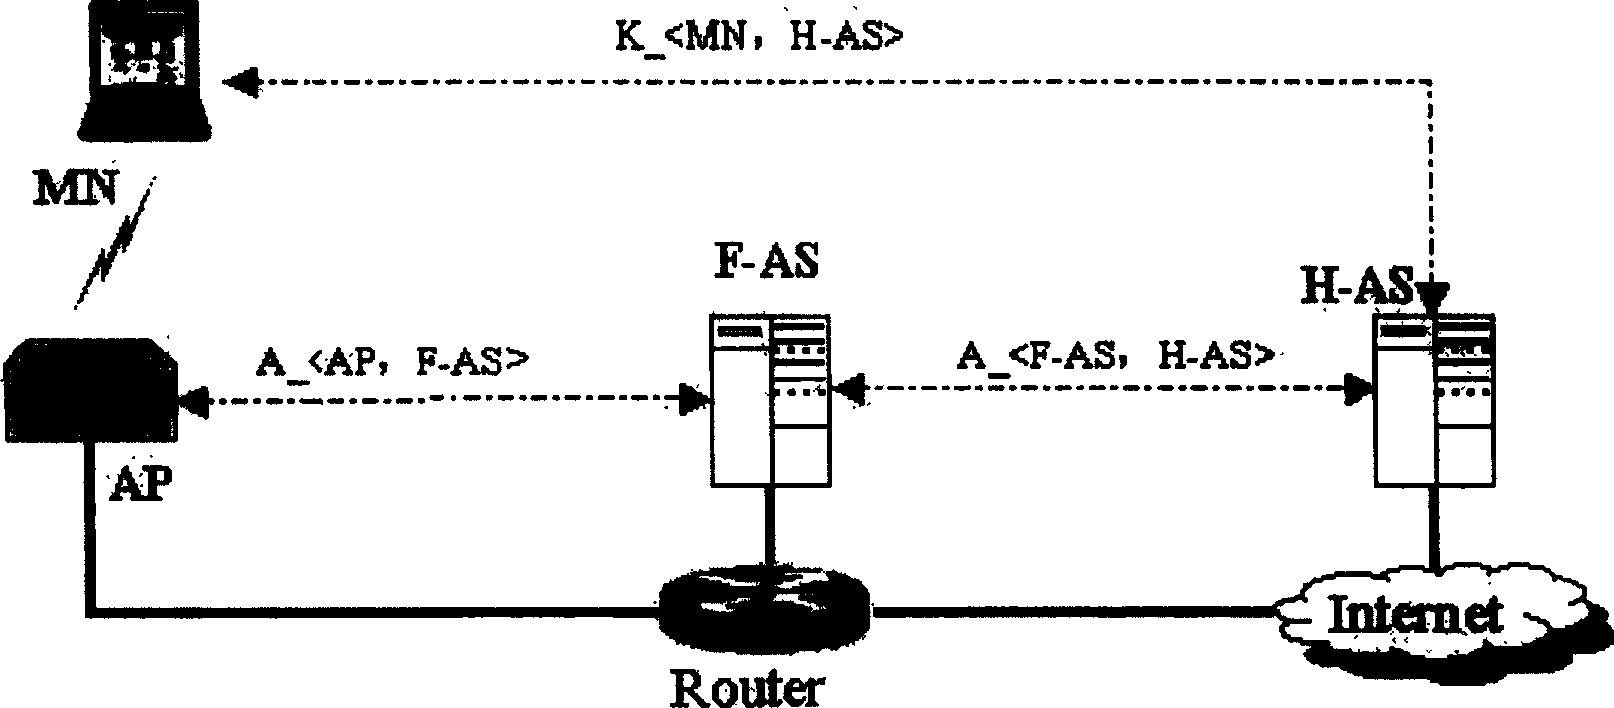 Radio LAN security access  method based on roaming key exchange authentication protocal